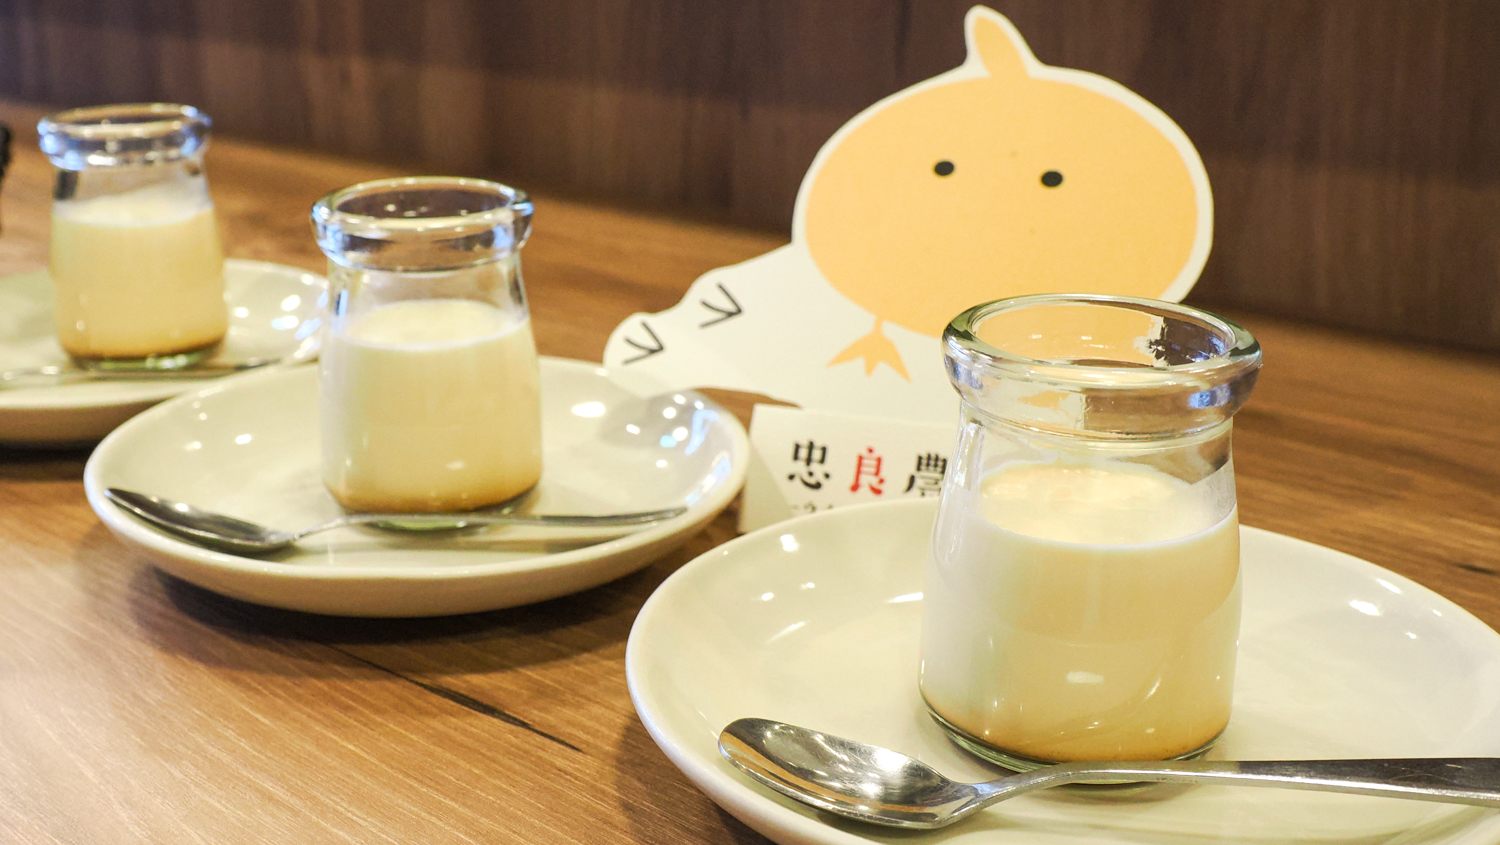 Original custard pudding made from the eggs of Hokkaido Wing Farm